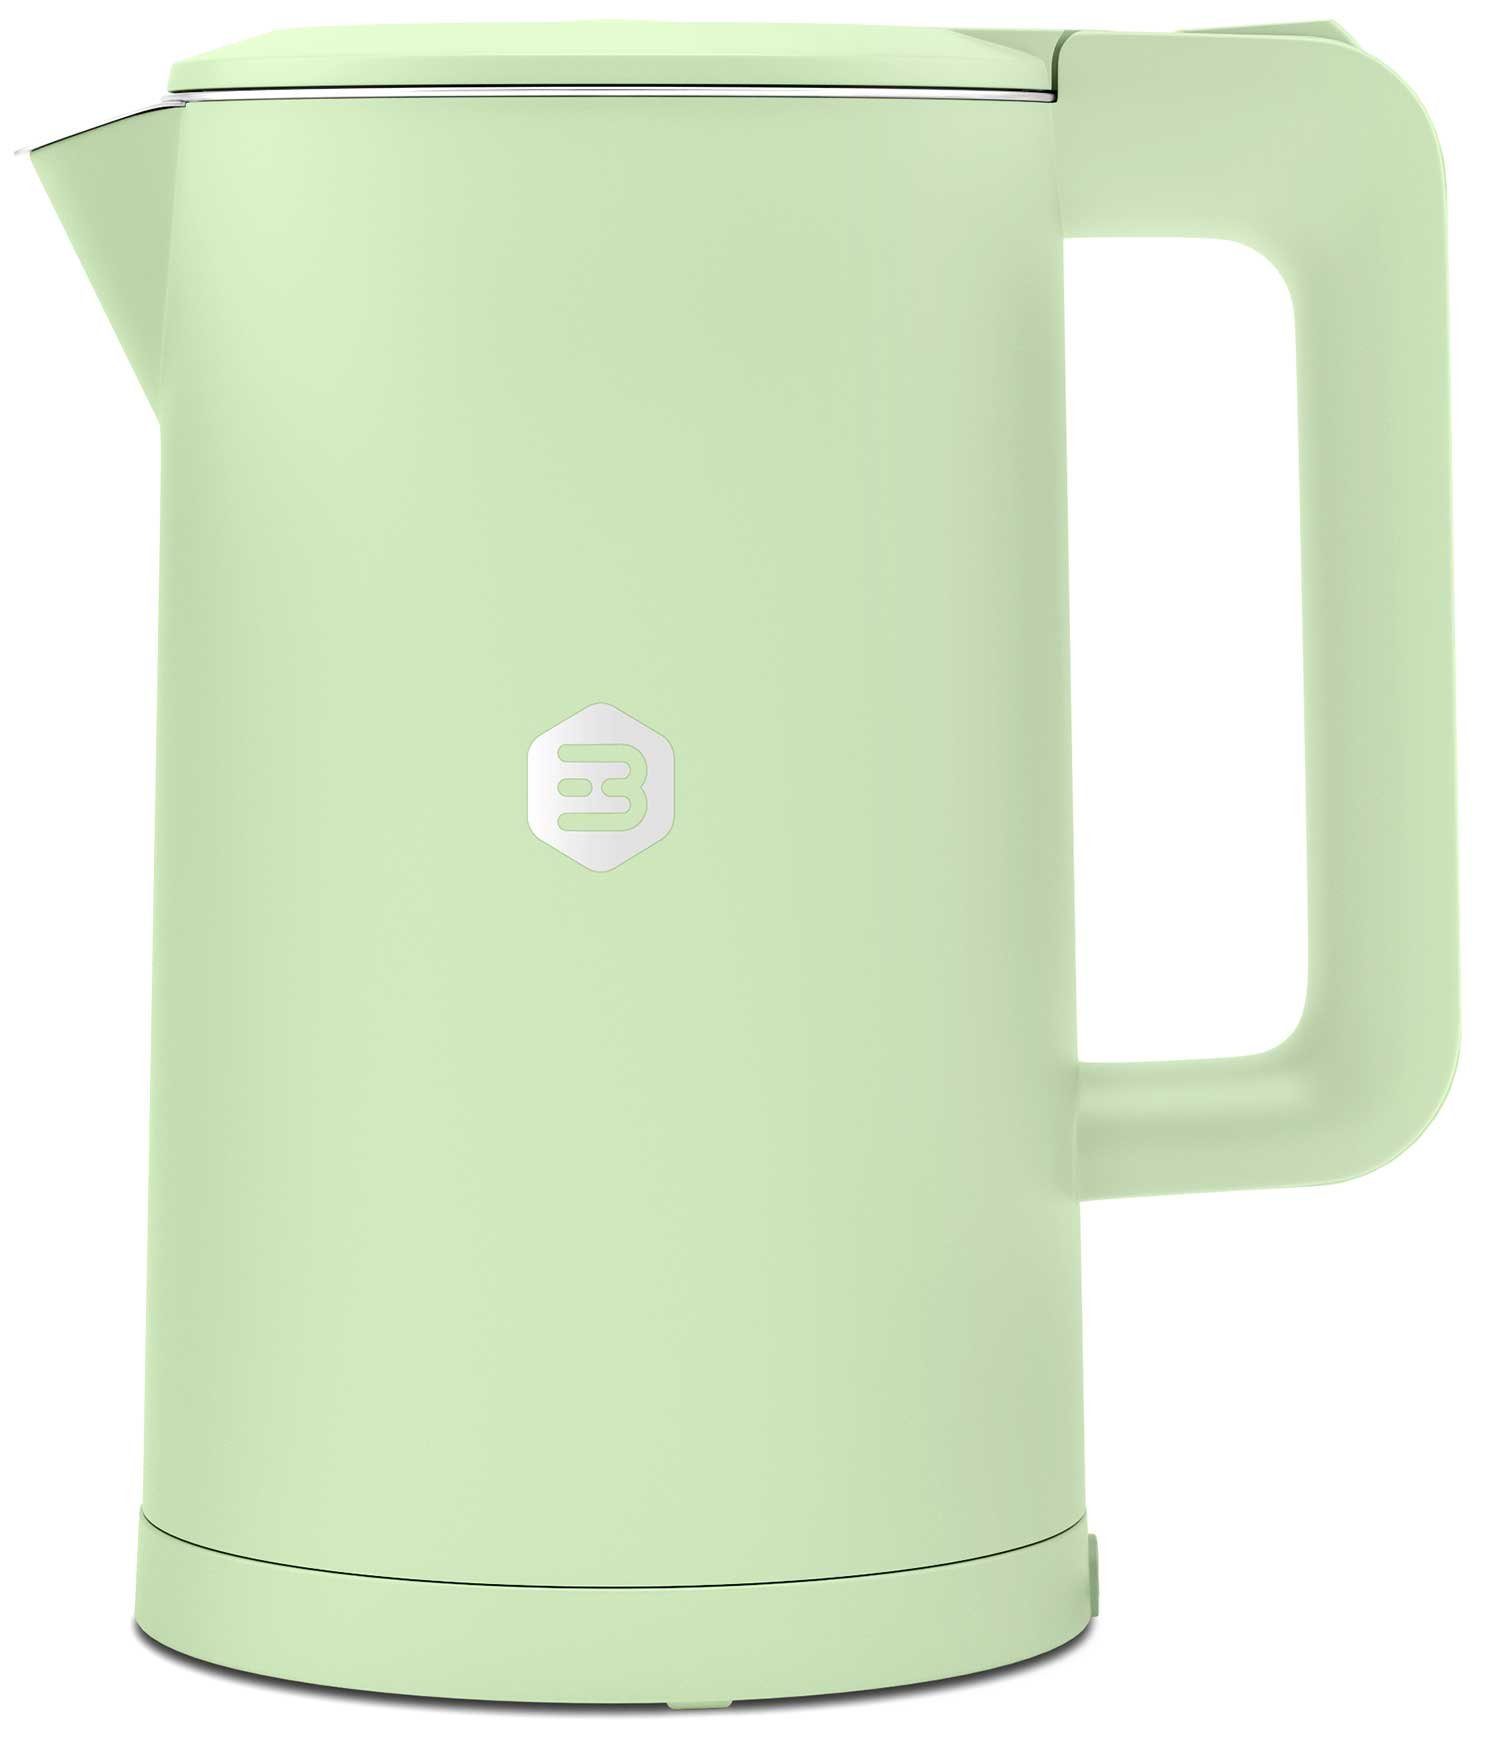 Balter Wasserkocher WK-4-MT, Edelstahl, 1,7 Liter, Doppelwand Design, BPA frei, LED, minze